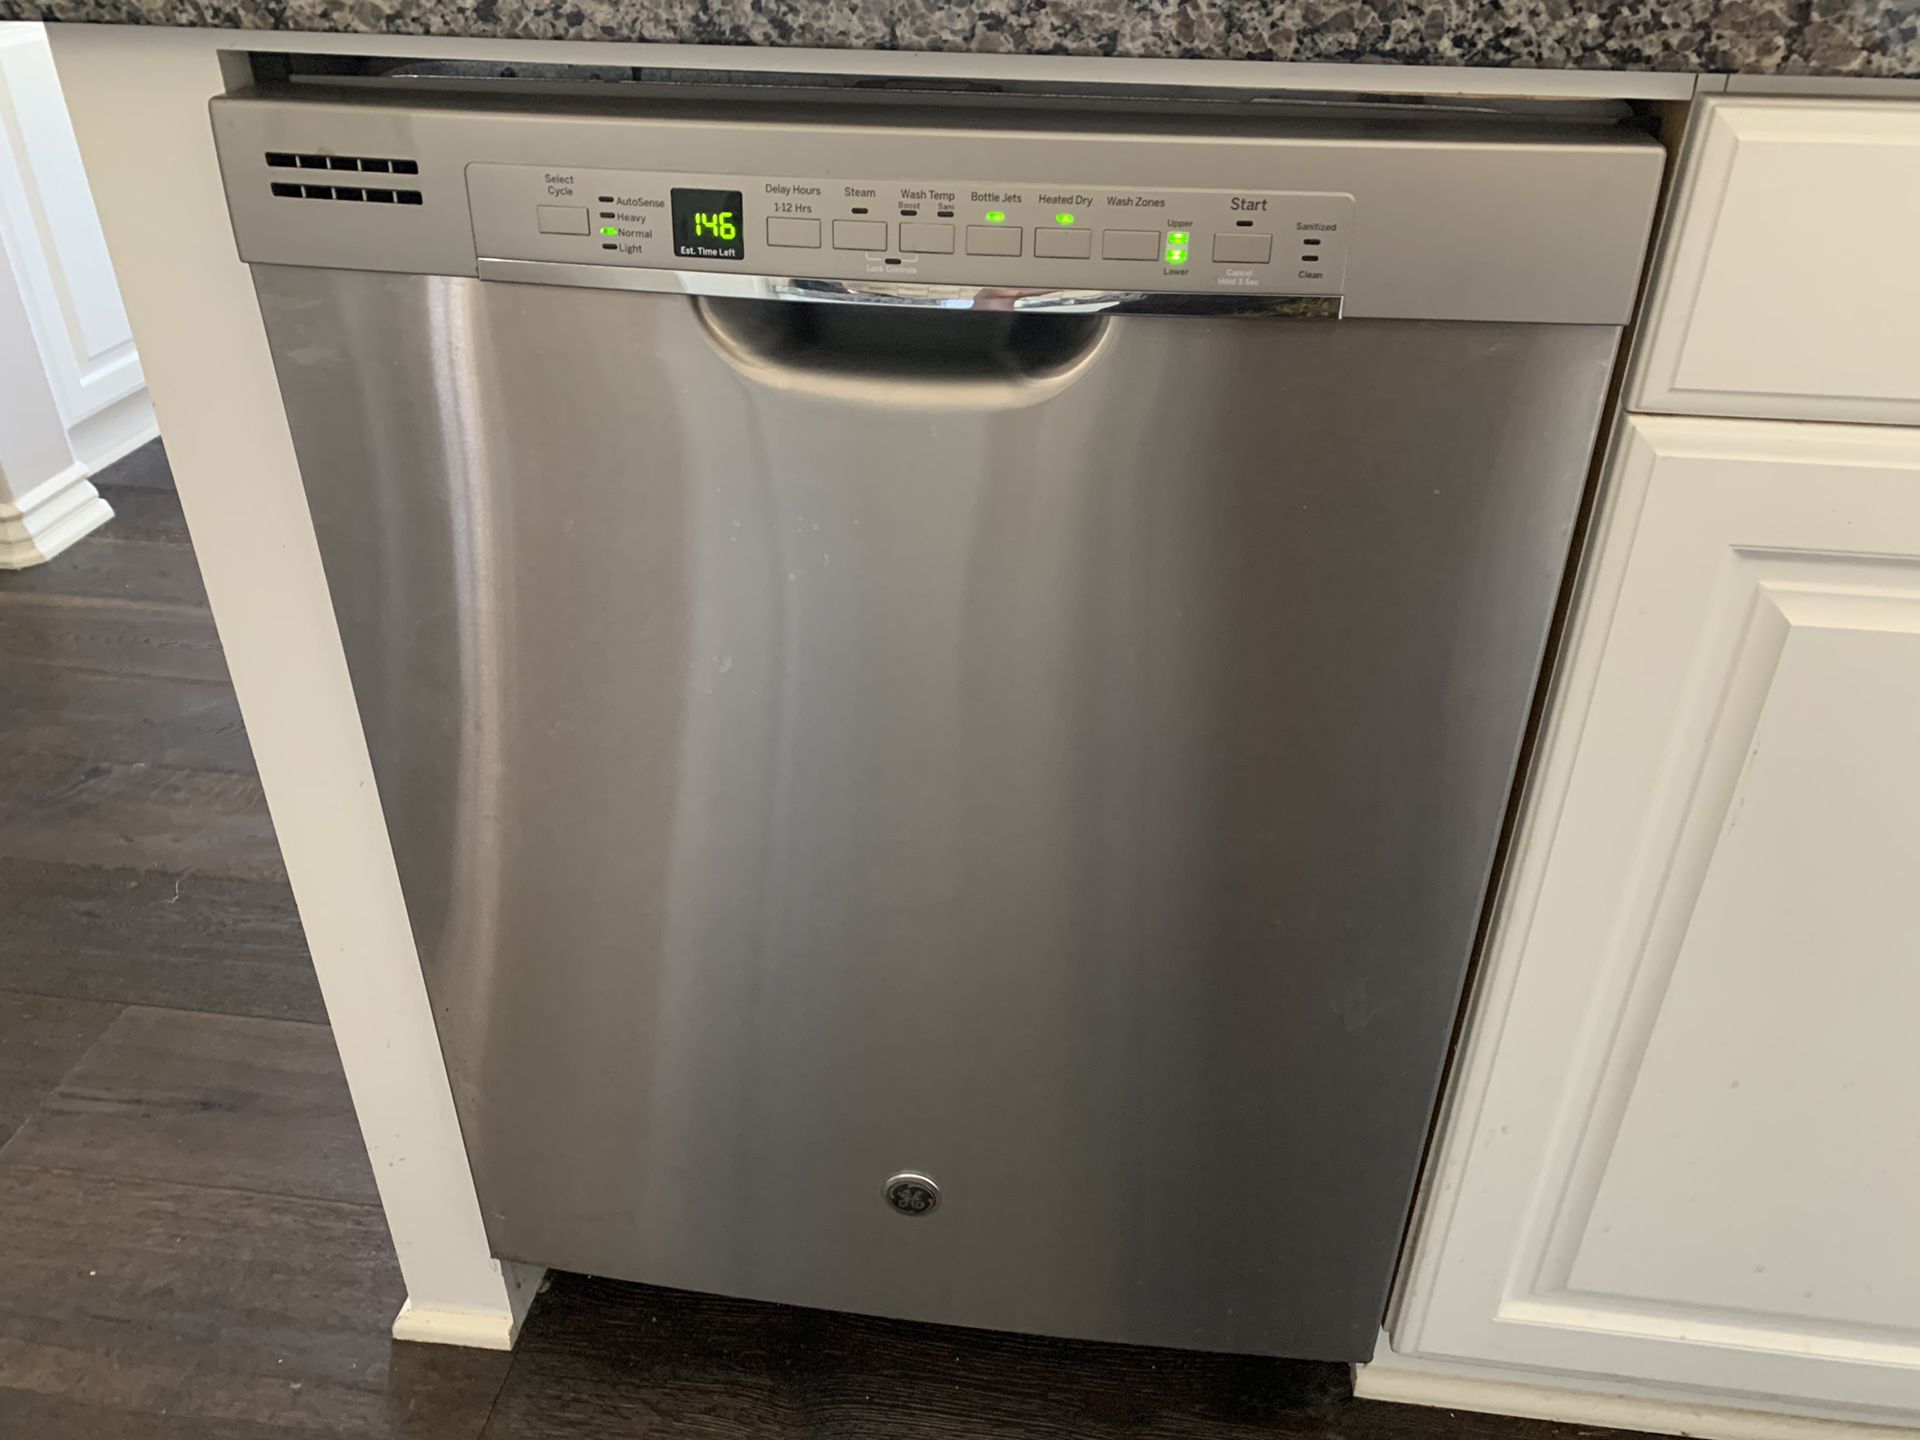 GE dishwasher for free (needs repairs)